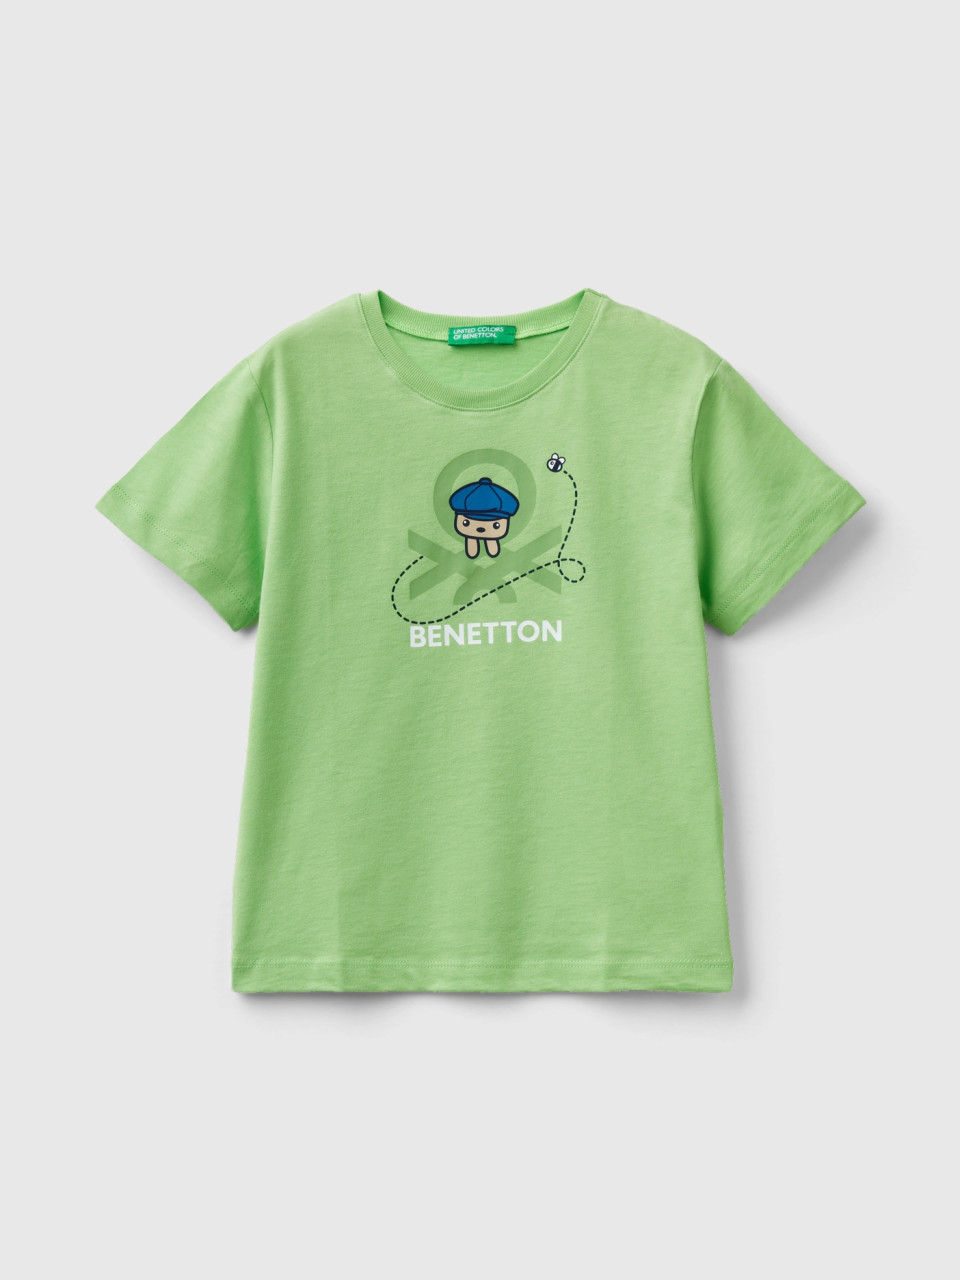 Benetton, T-shirt With Print In 100% Organic Cotton, Light Green, Kids